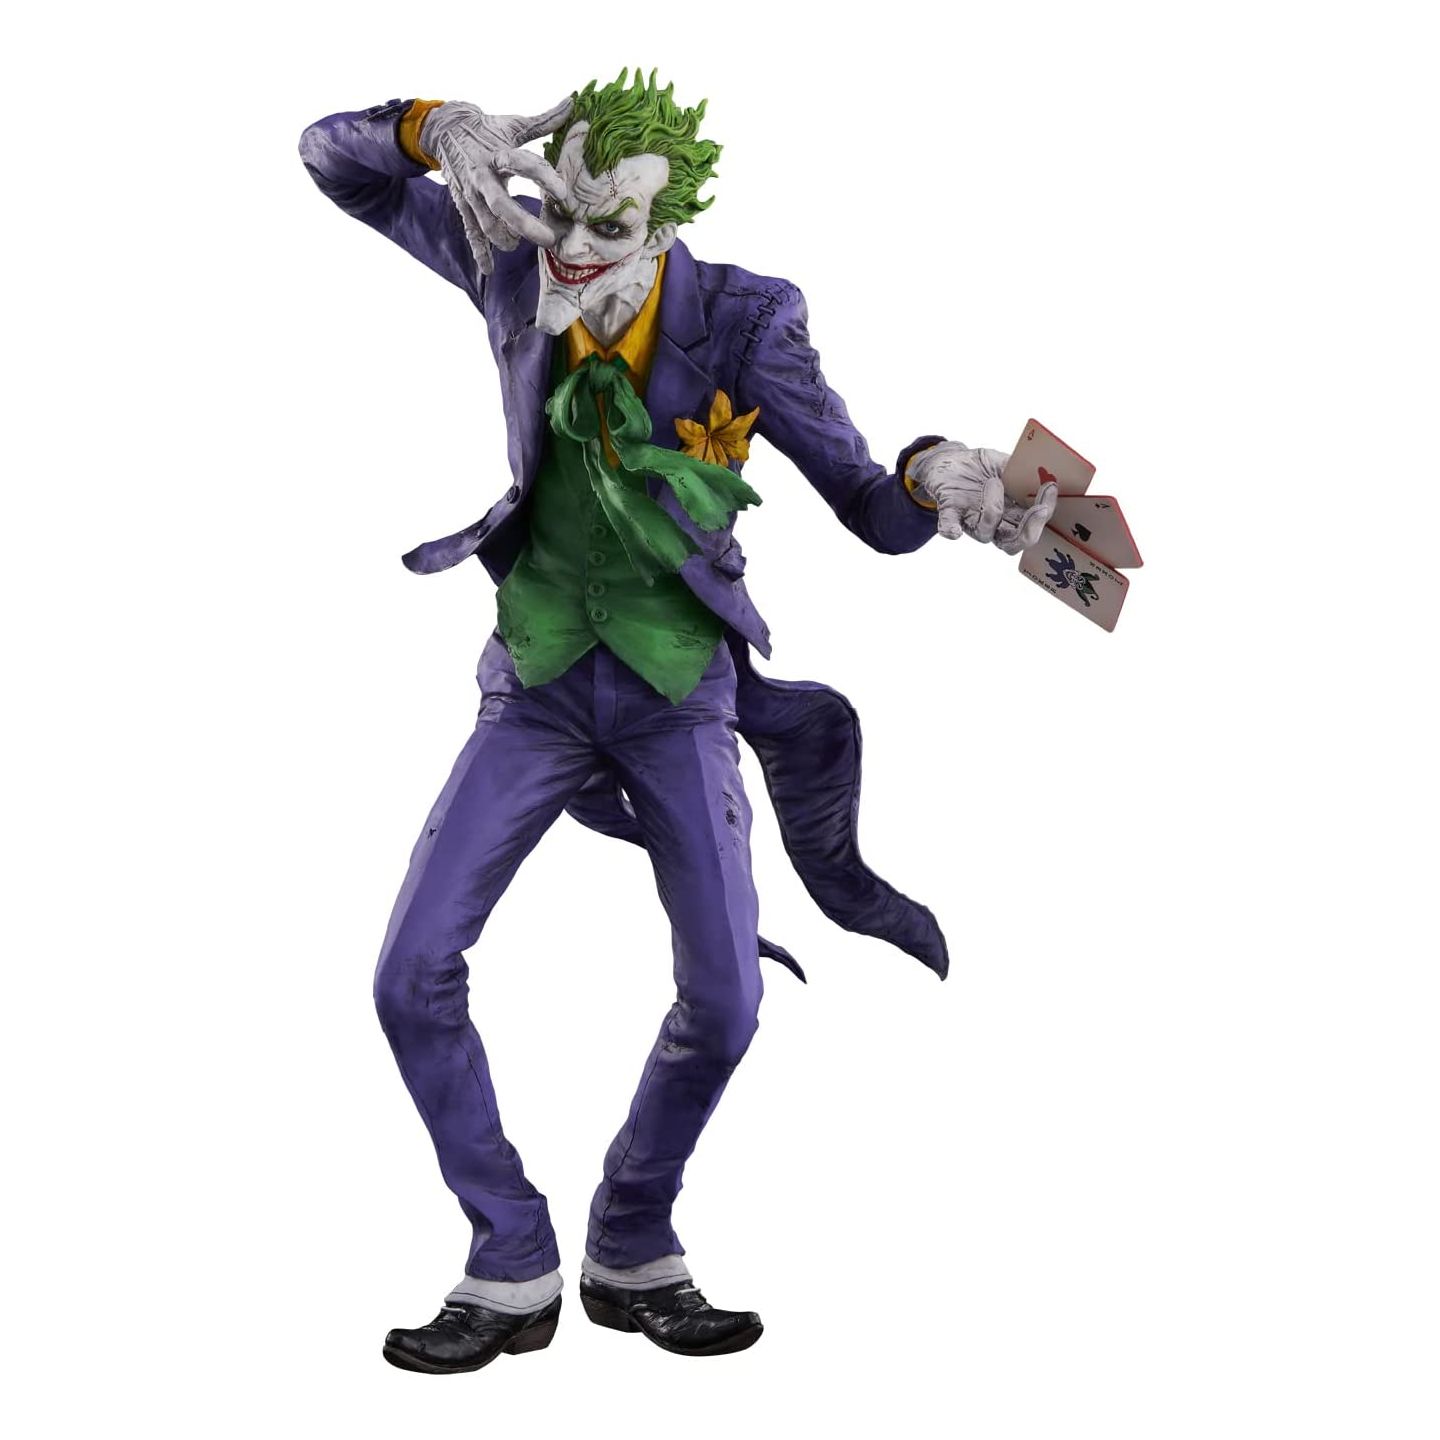 UNION CREATIVE - sofbinal Batman - Joker Laughing Purple Ver. Figure